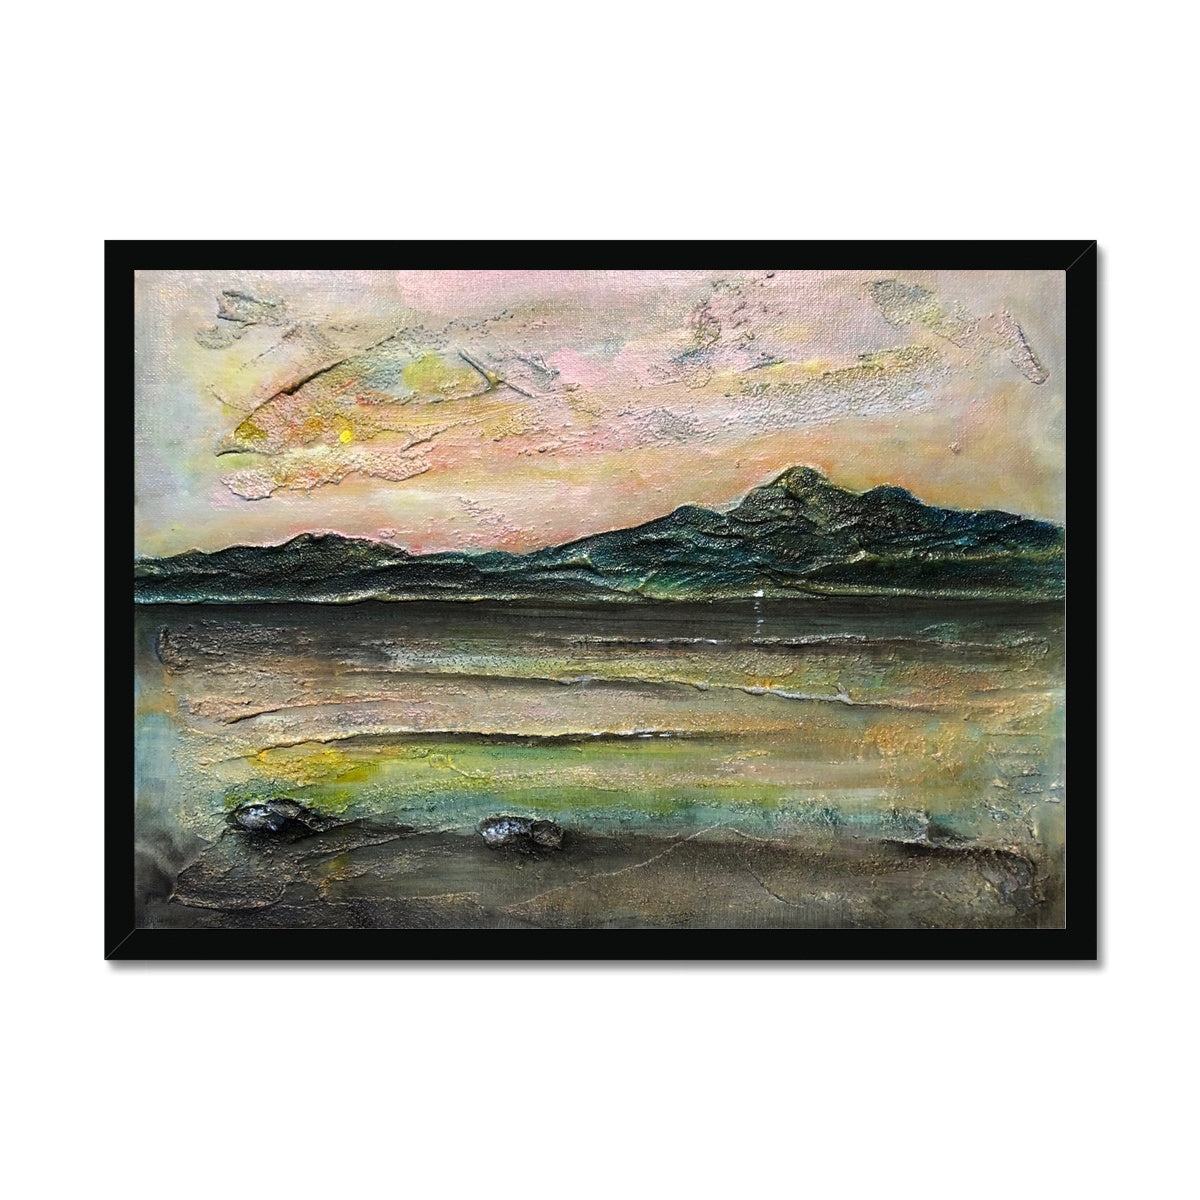 An Ethereal Loch Na Dal Skye Painting | Framed Prints From Scotland-Framed Prints-Scottish Lochs & Mountains Art Gallery-A2 Landscape-Black Frame-Paintings, Prints, Homeware, Art Gifts From Scotland By Scottish Artist Kevin Hunter